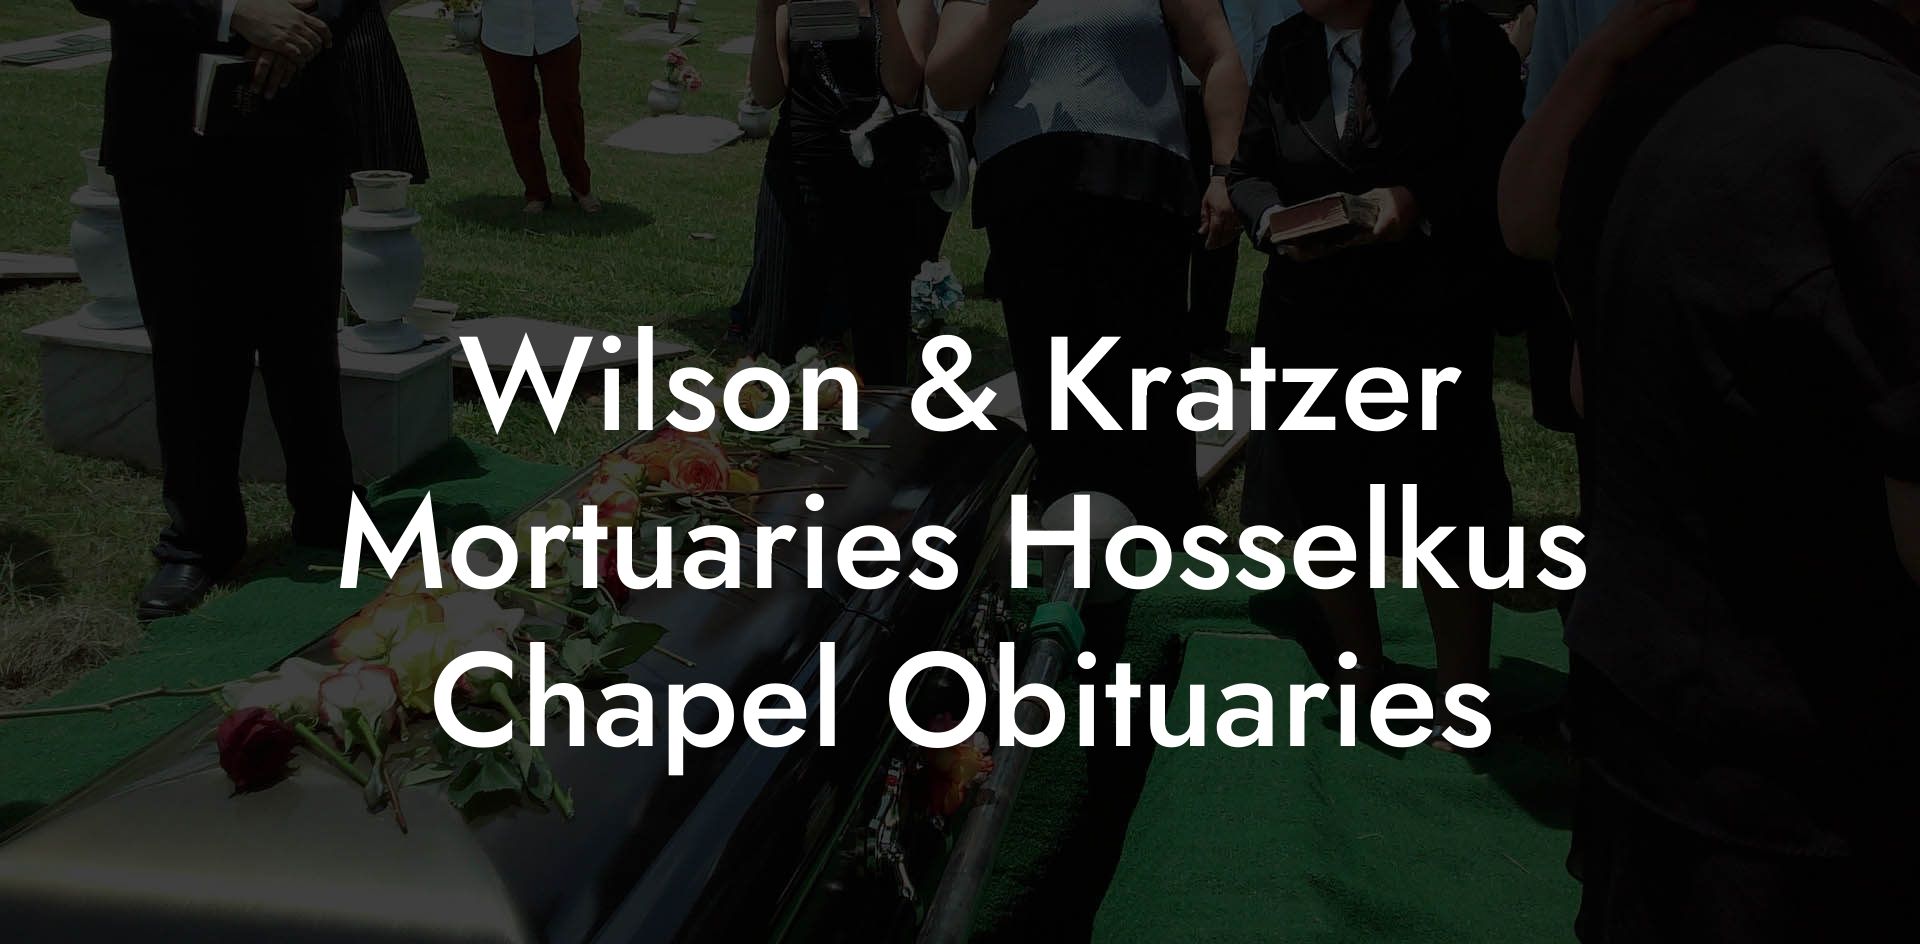 Wilson & Kratzer Mortuaries Hosselkus Chapel Obituaries